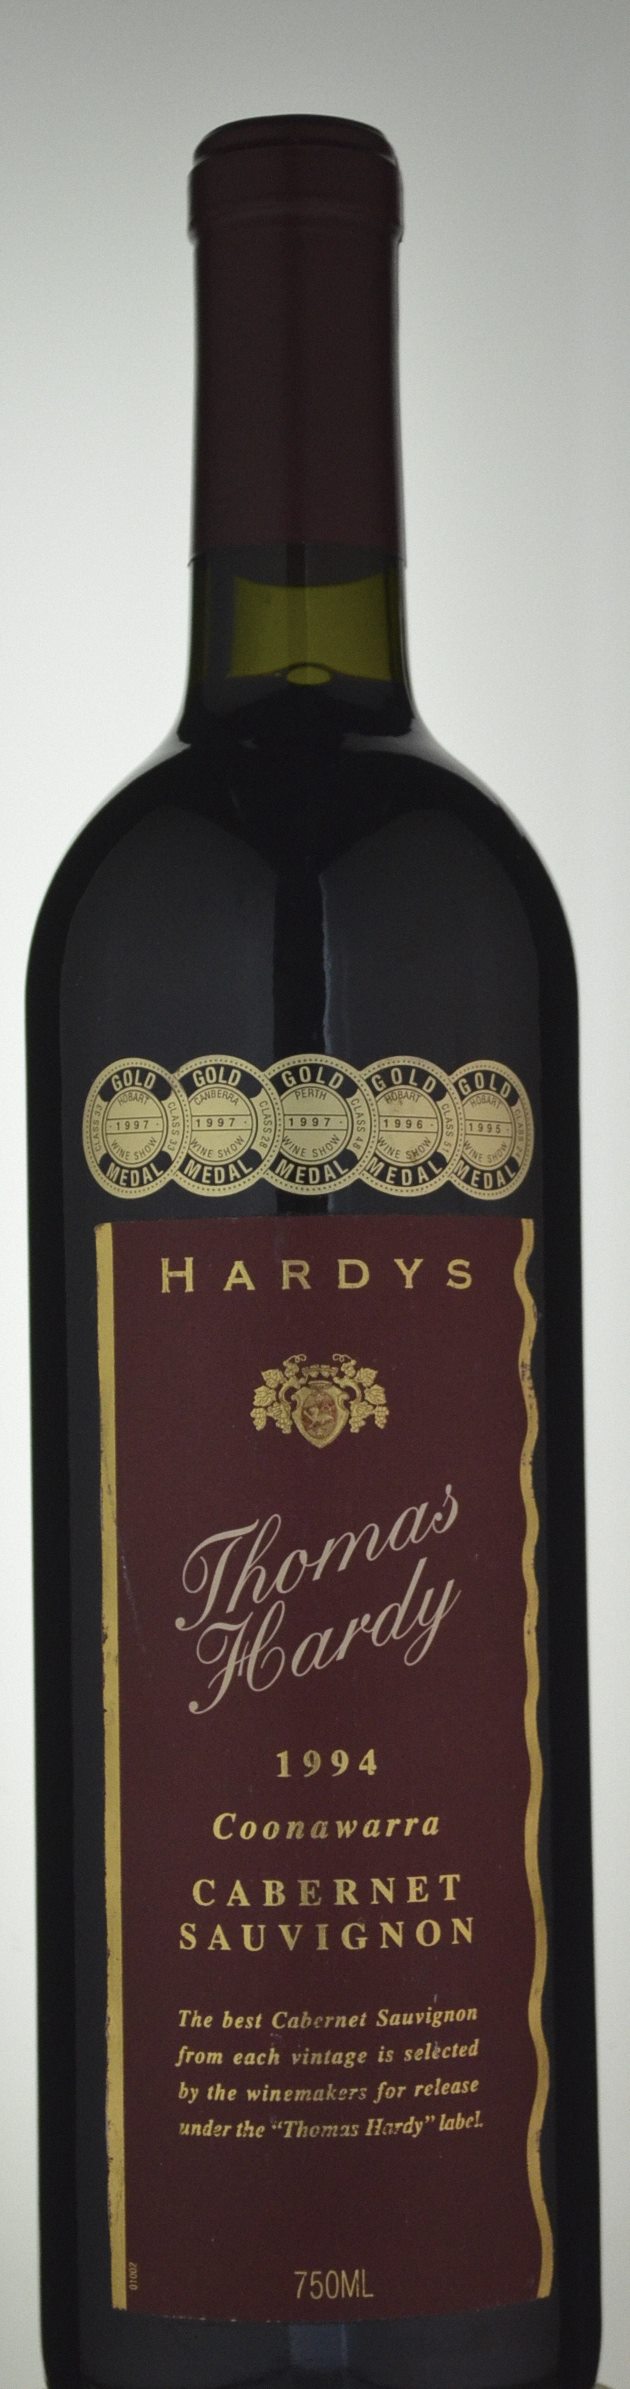 Hardy's Thomas Hardy Cabernet Sauvignon 1994